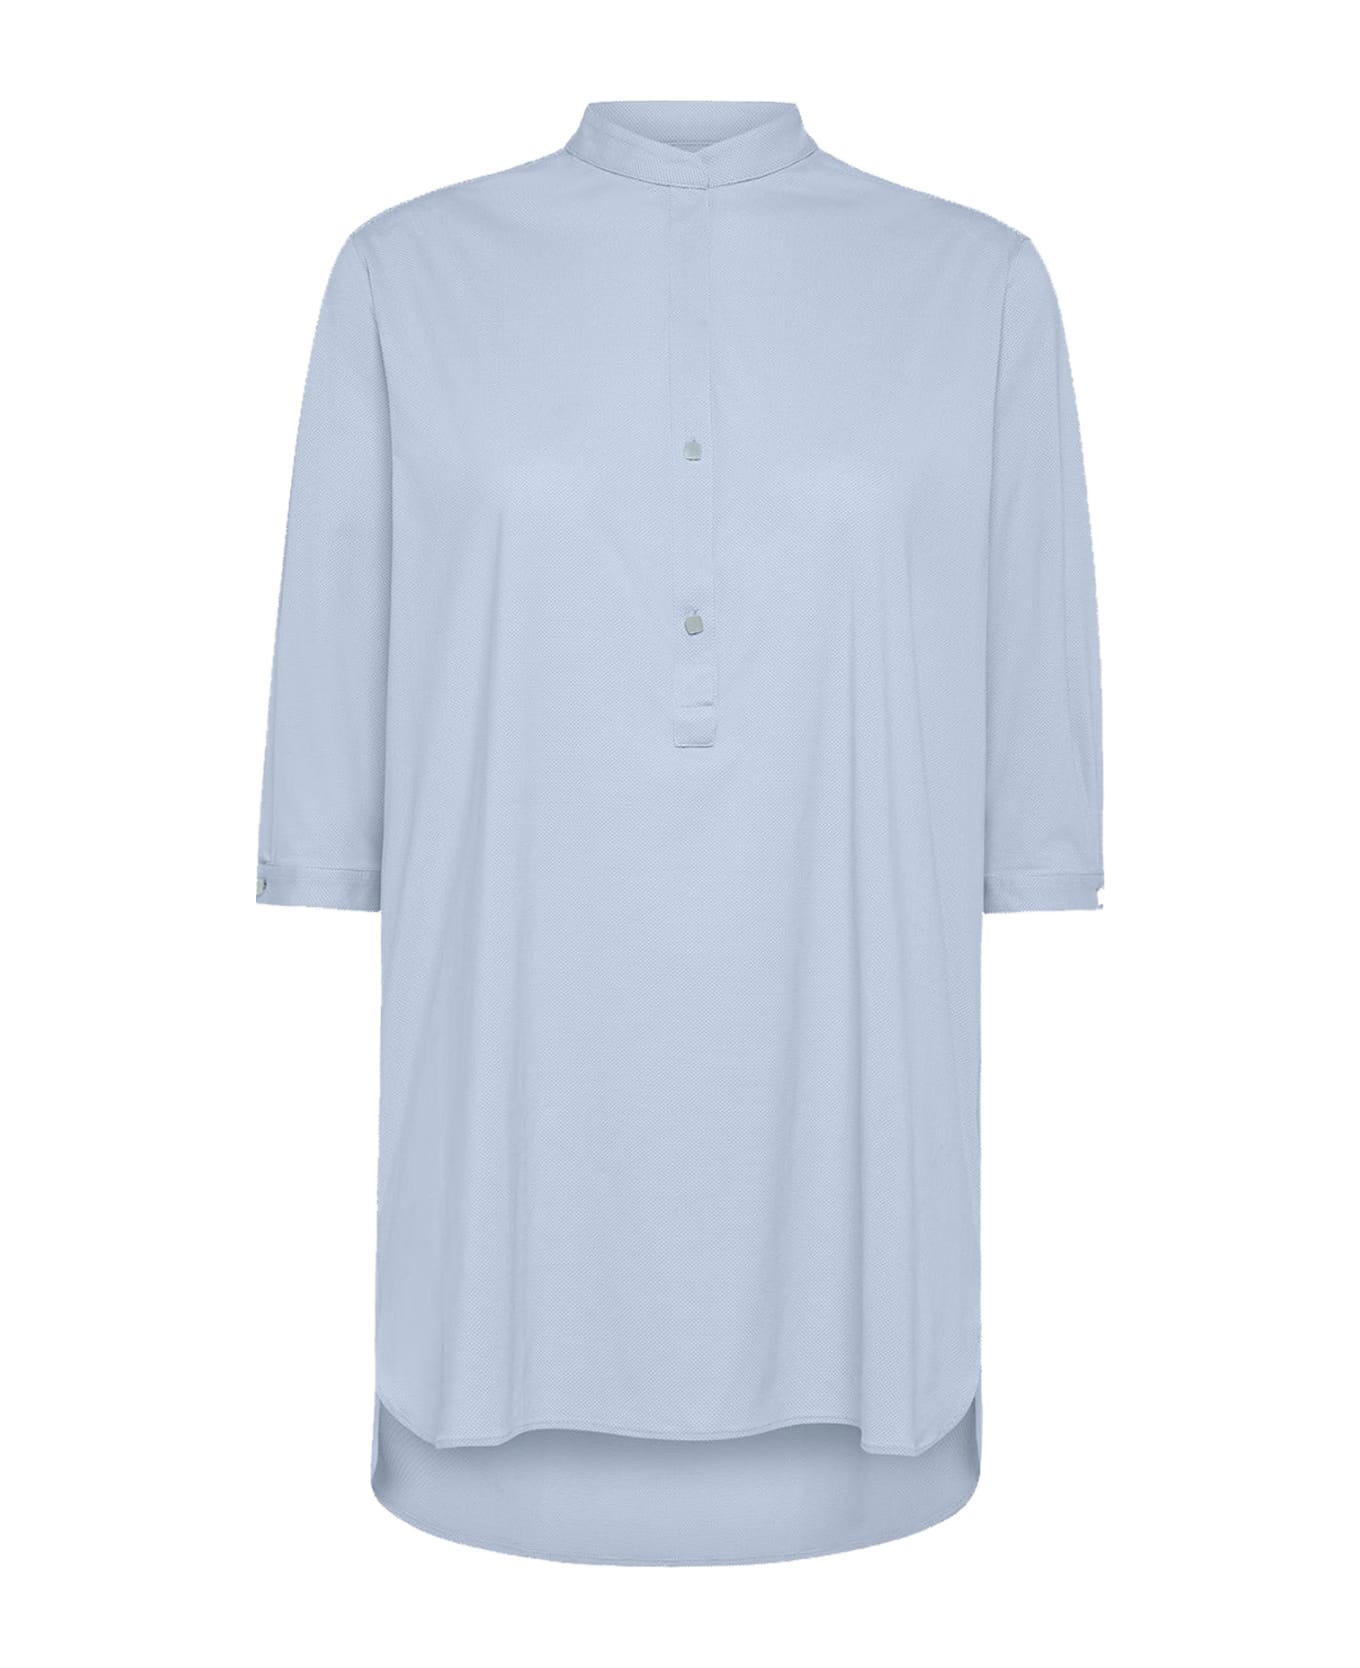 RRD - Roberto Ricci Design Shirt - Light Blue シャツ